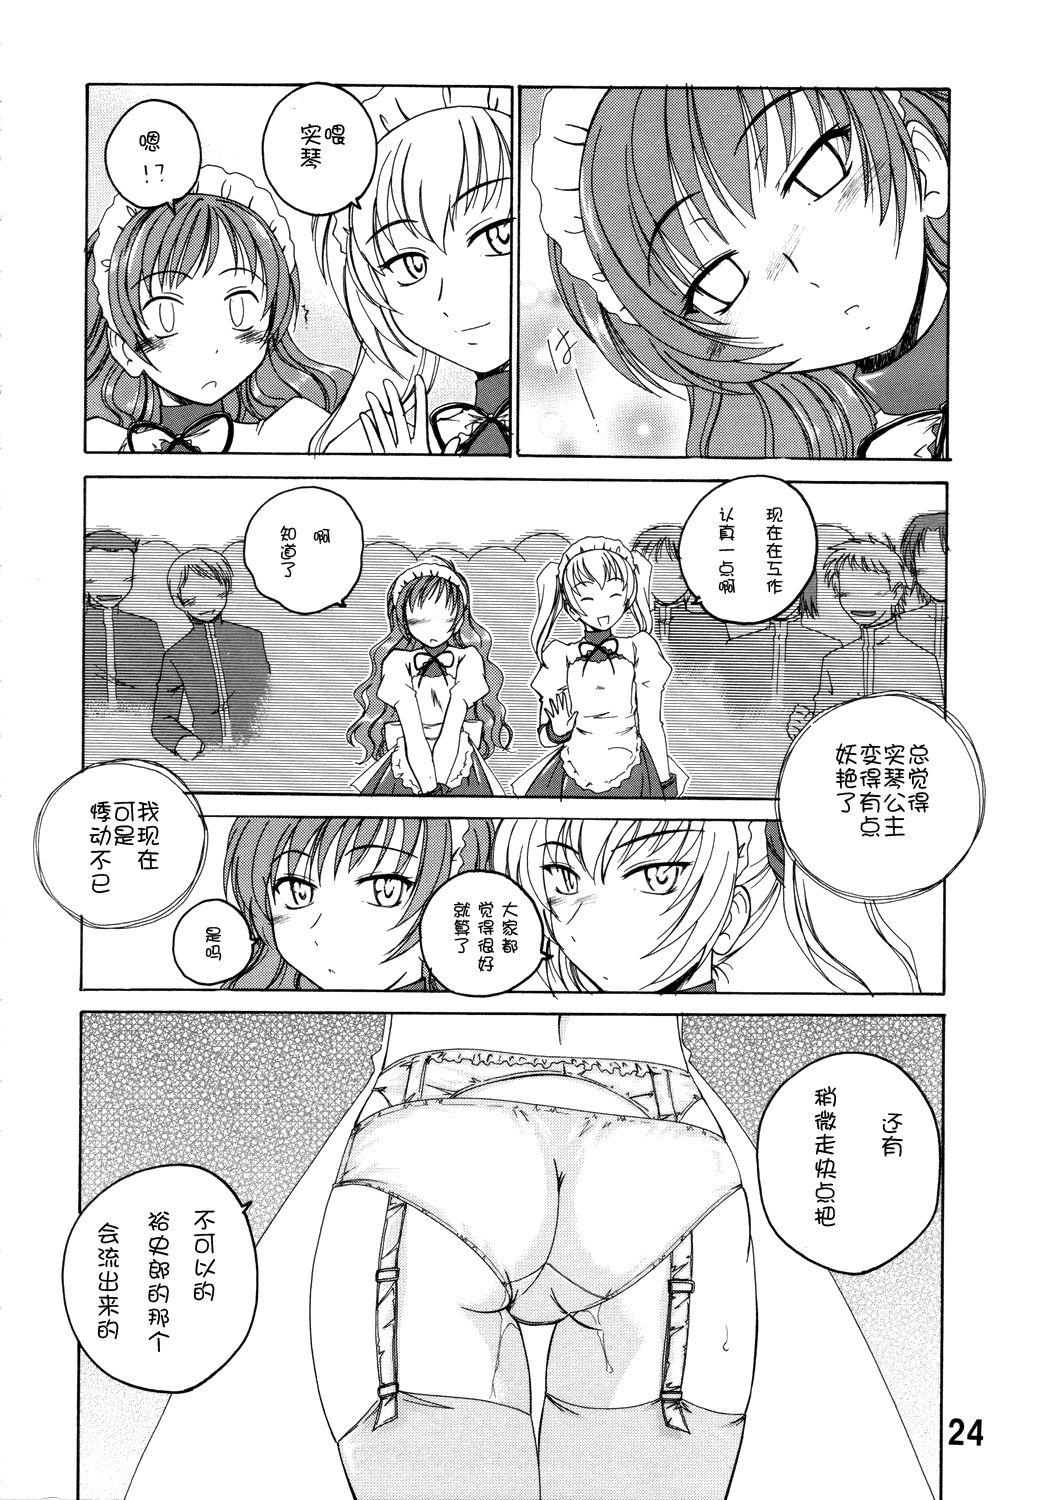 Manga Sangyou Haikibutsu 11 - Comic Industrial Wastes 11 22